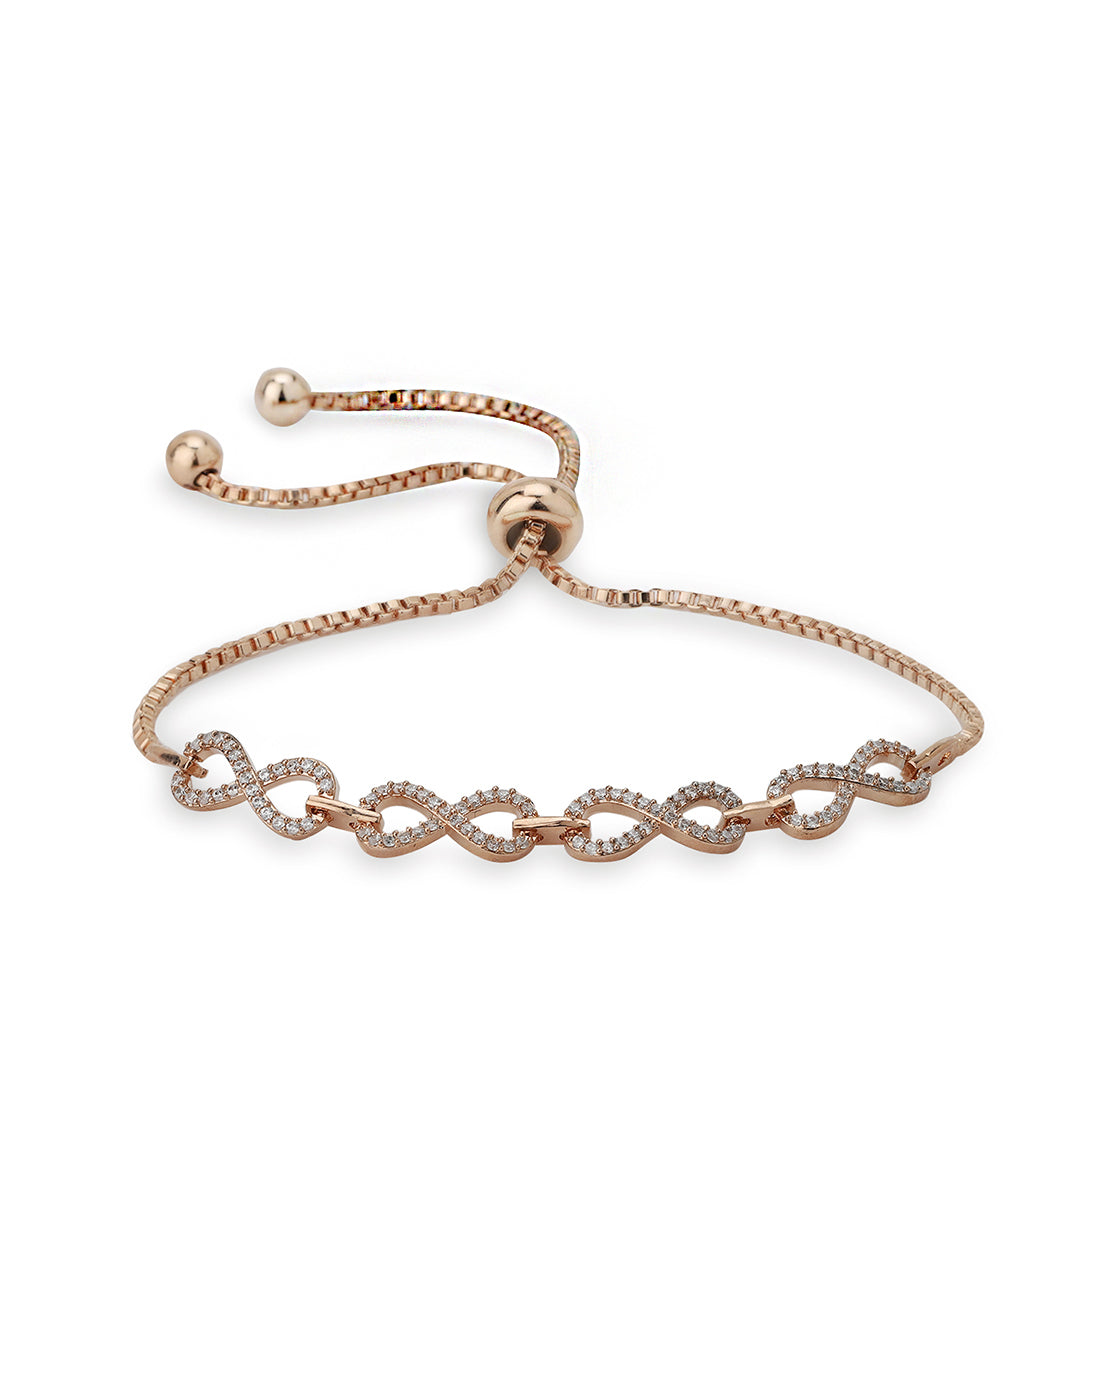 Infinity Knot Bracelet in Sterling Silver 7.15 Grams Size 8 Inch - 3226510  - TJC